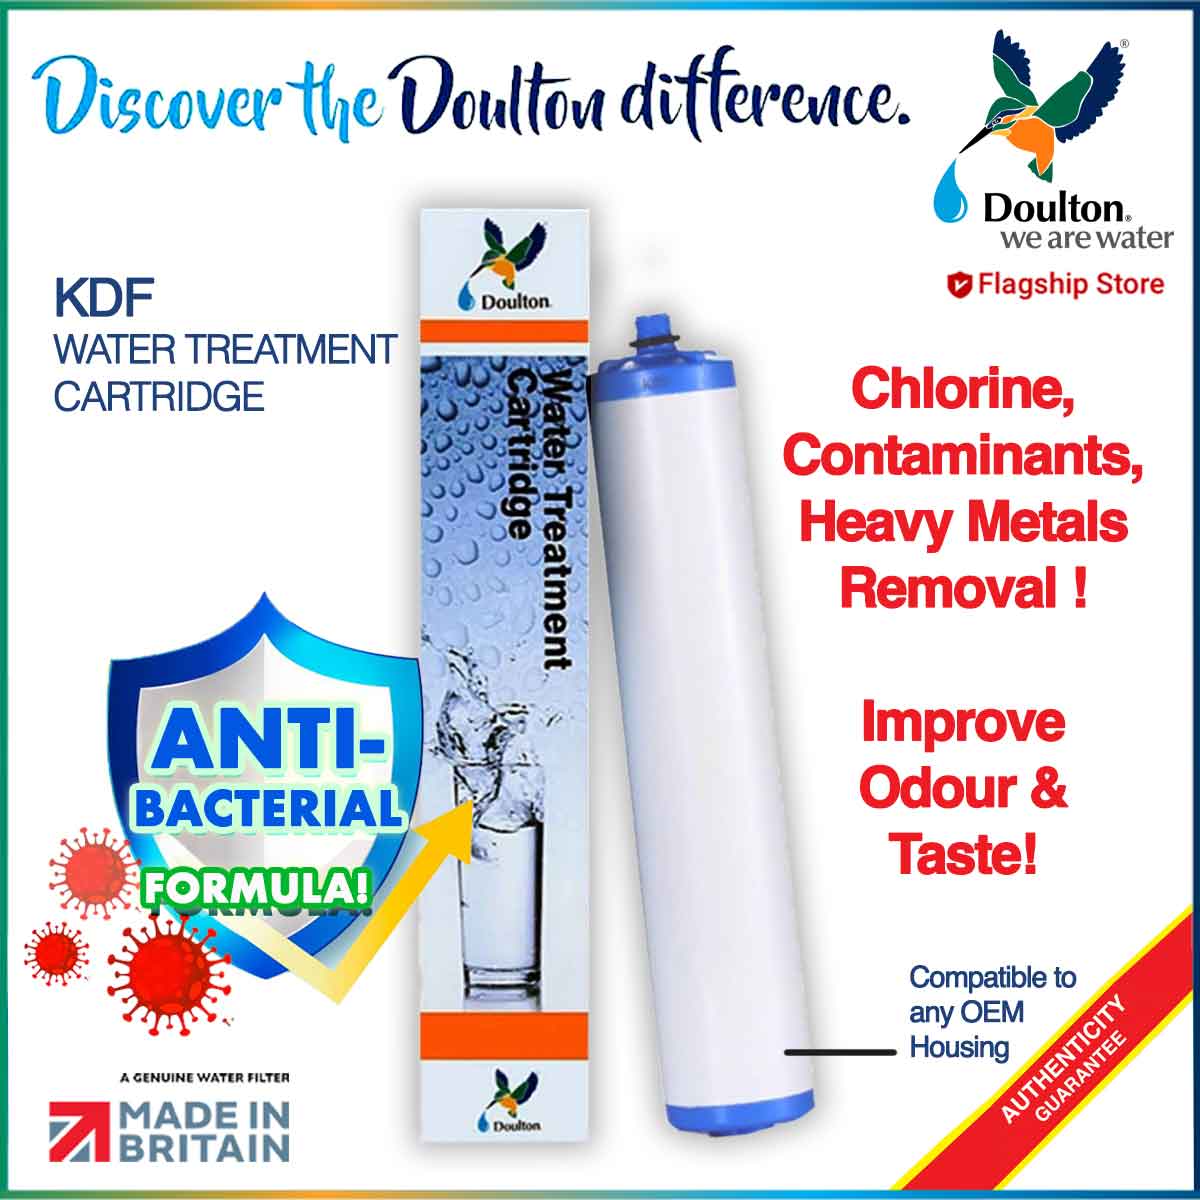 Doulton KDF Water Treatment Cartridge